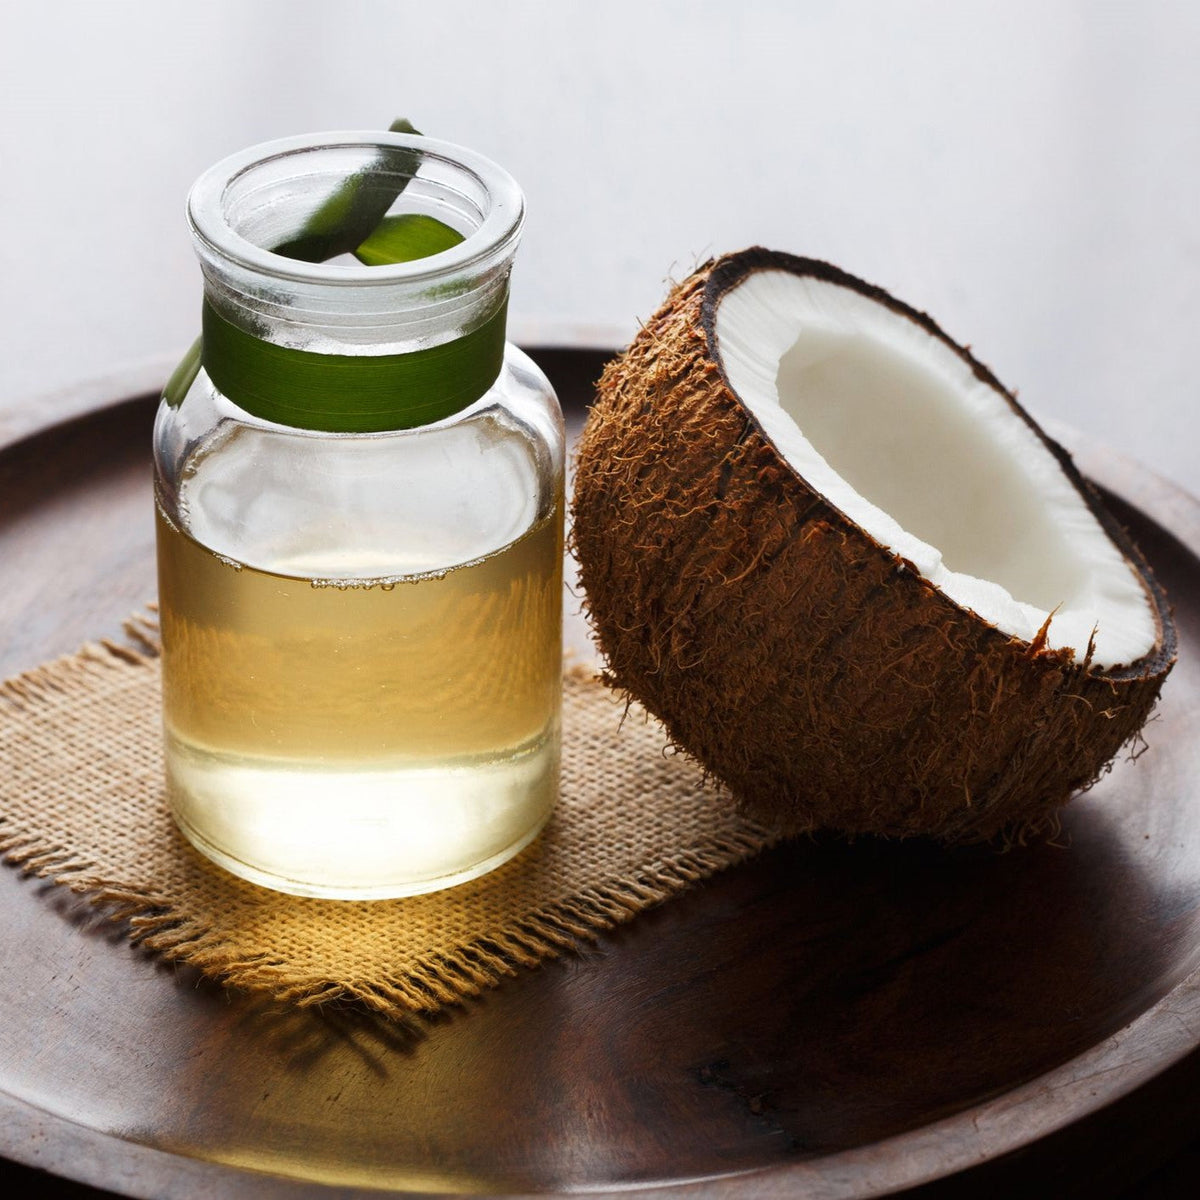 RBD Coconut Oil